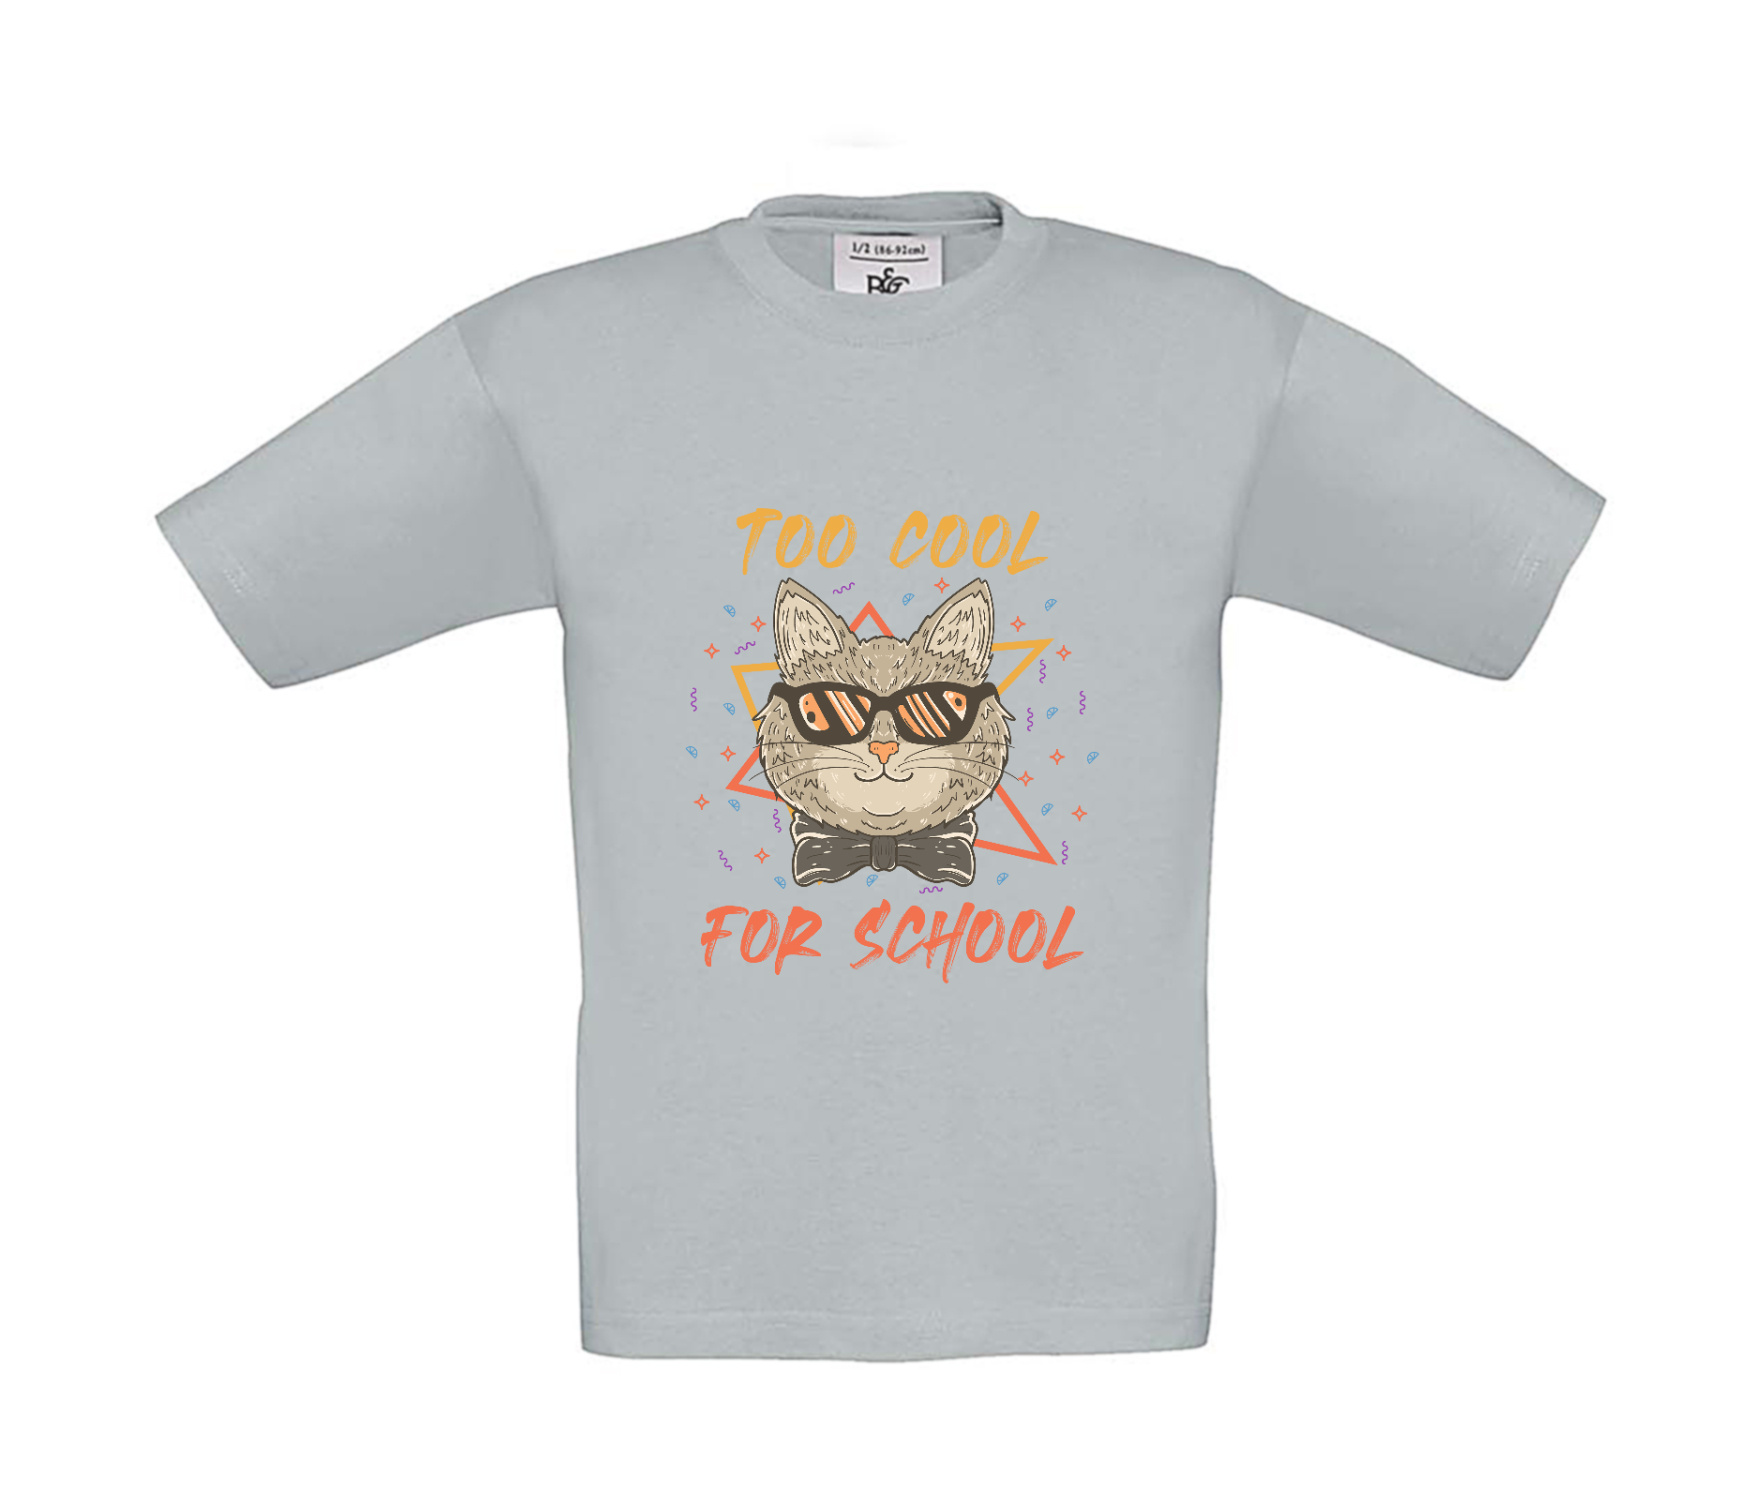 T-Shirt Kinder Katzen - To cool for school